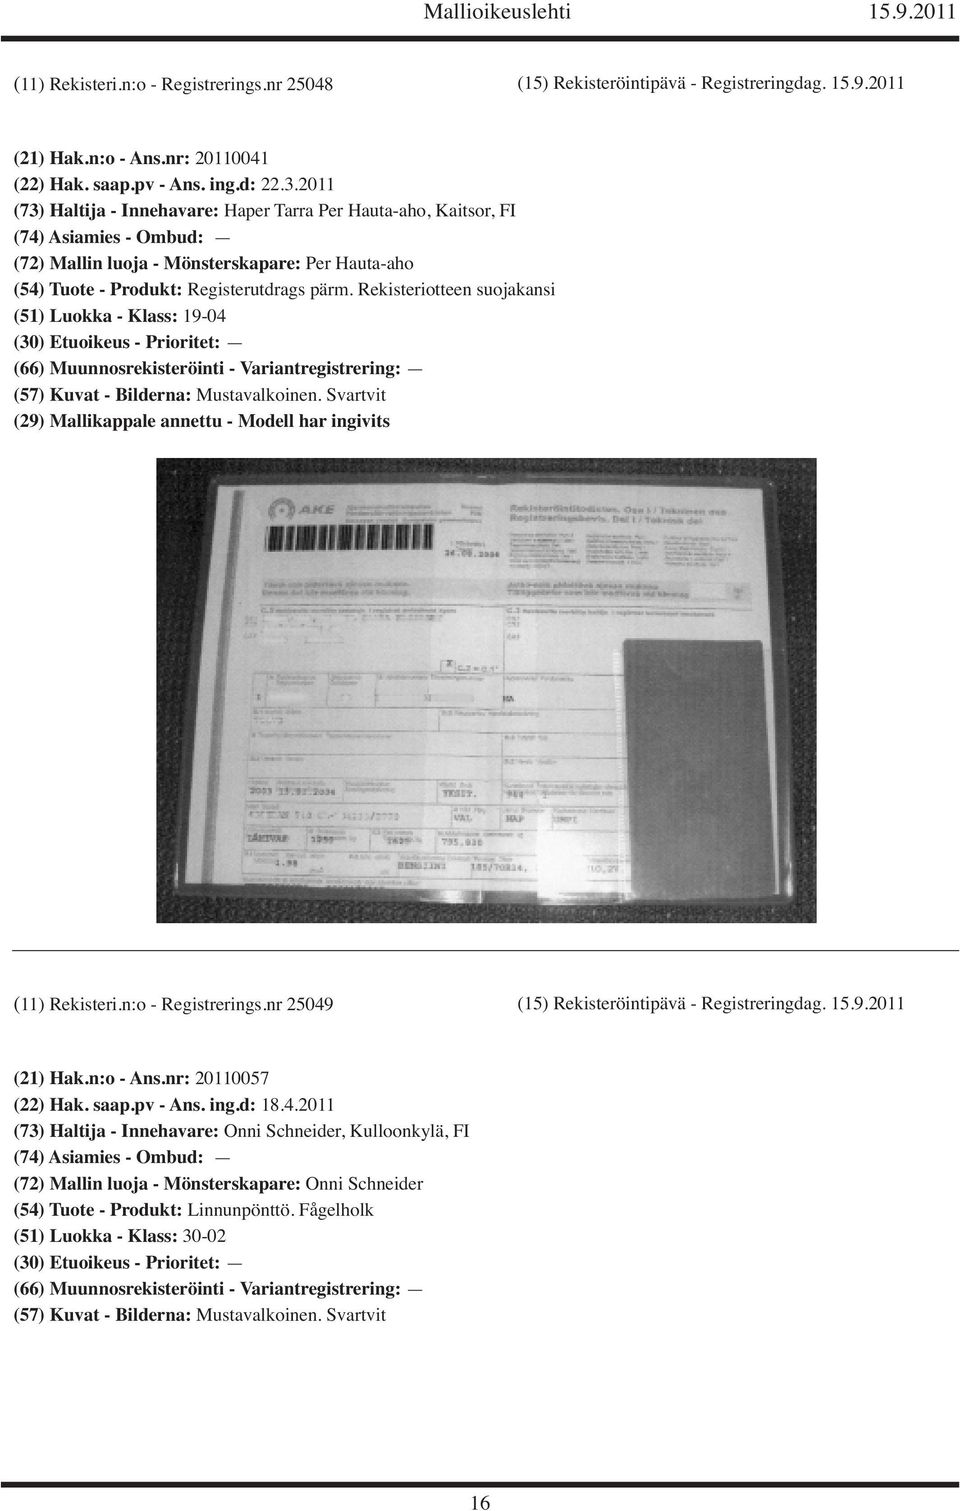 Rekisteriotteen suojakansi (51) Luokka - Klass: 19-04 (29) Mallikappale annettu - Modell har ingivits (11) Rekisteri.n:o - Registrerings.nr 25049 (15) Rekisteröintipävä - Registreringdag. 15.9.2011 (21) Hak.